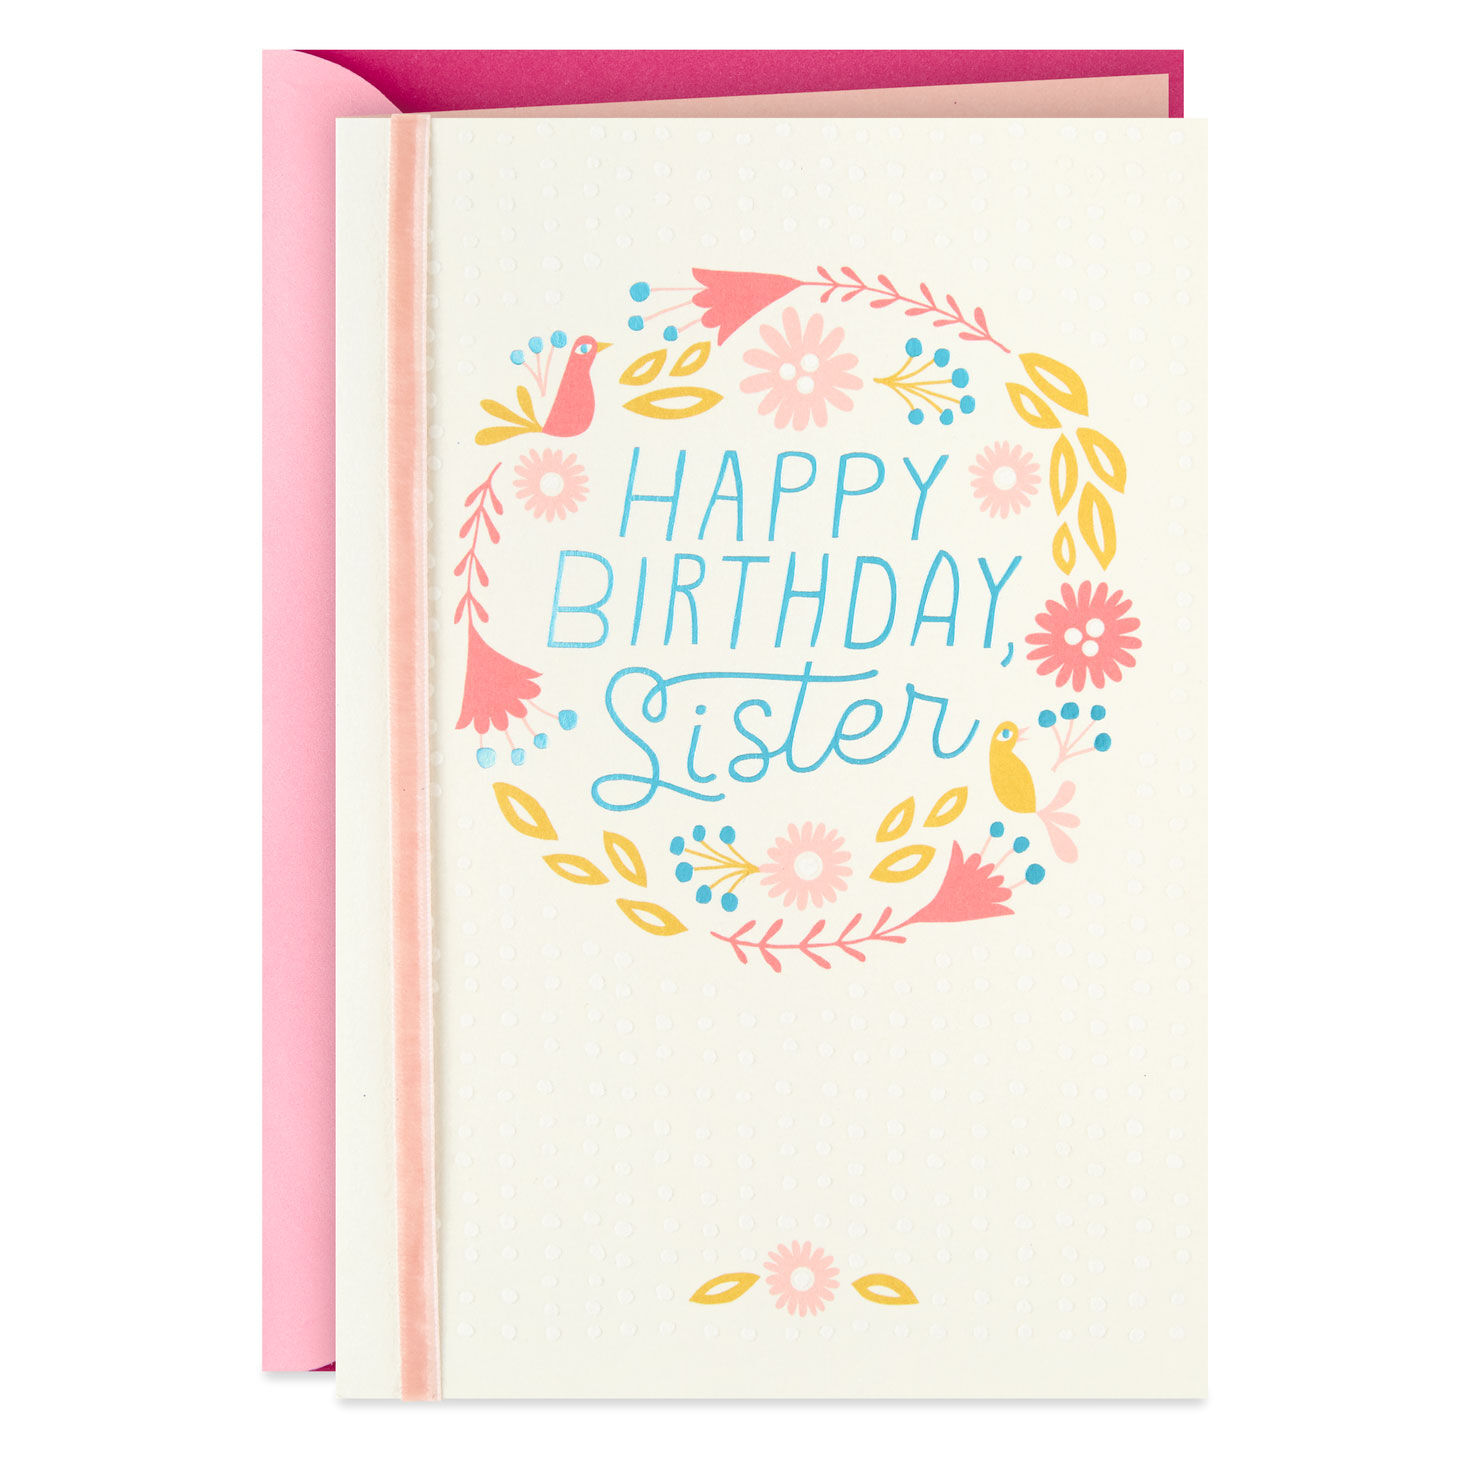 BIRTHDAY CARD ~ SISTER